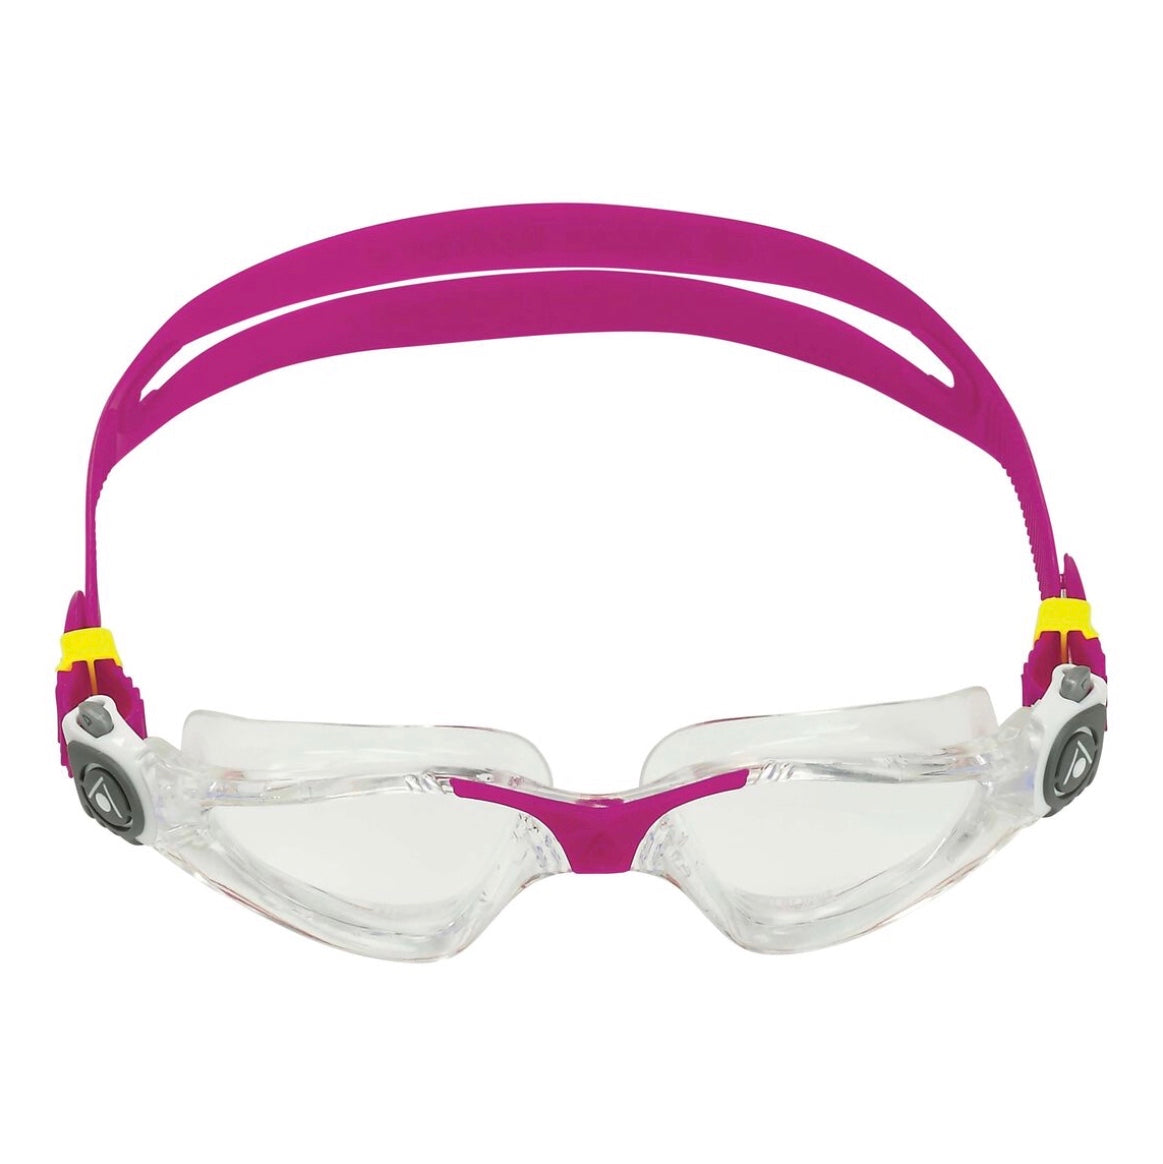 Aquasphere | Swim Goggles | Kayenne Compact Fit